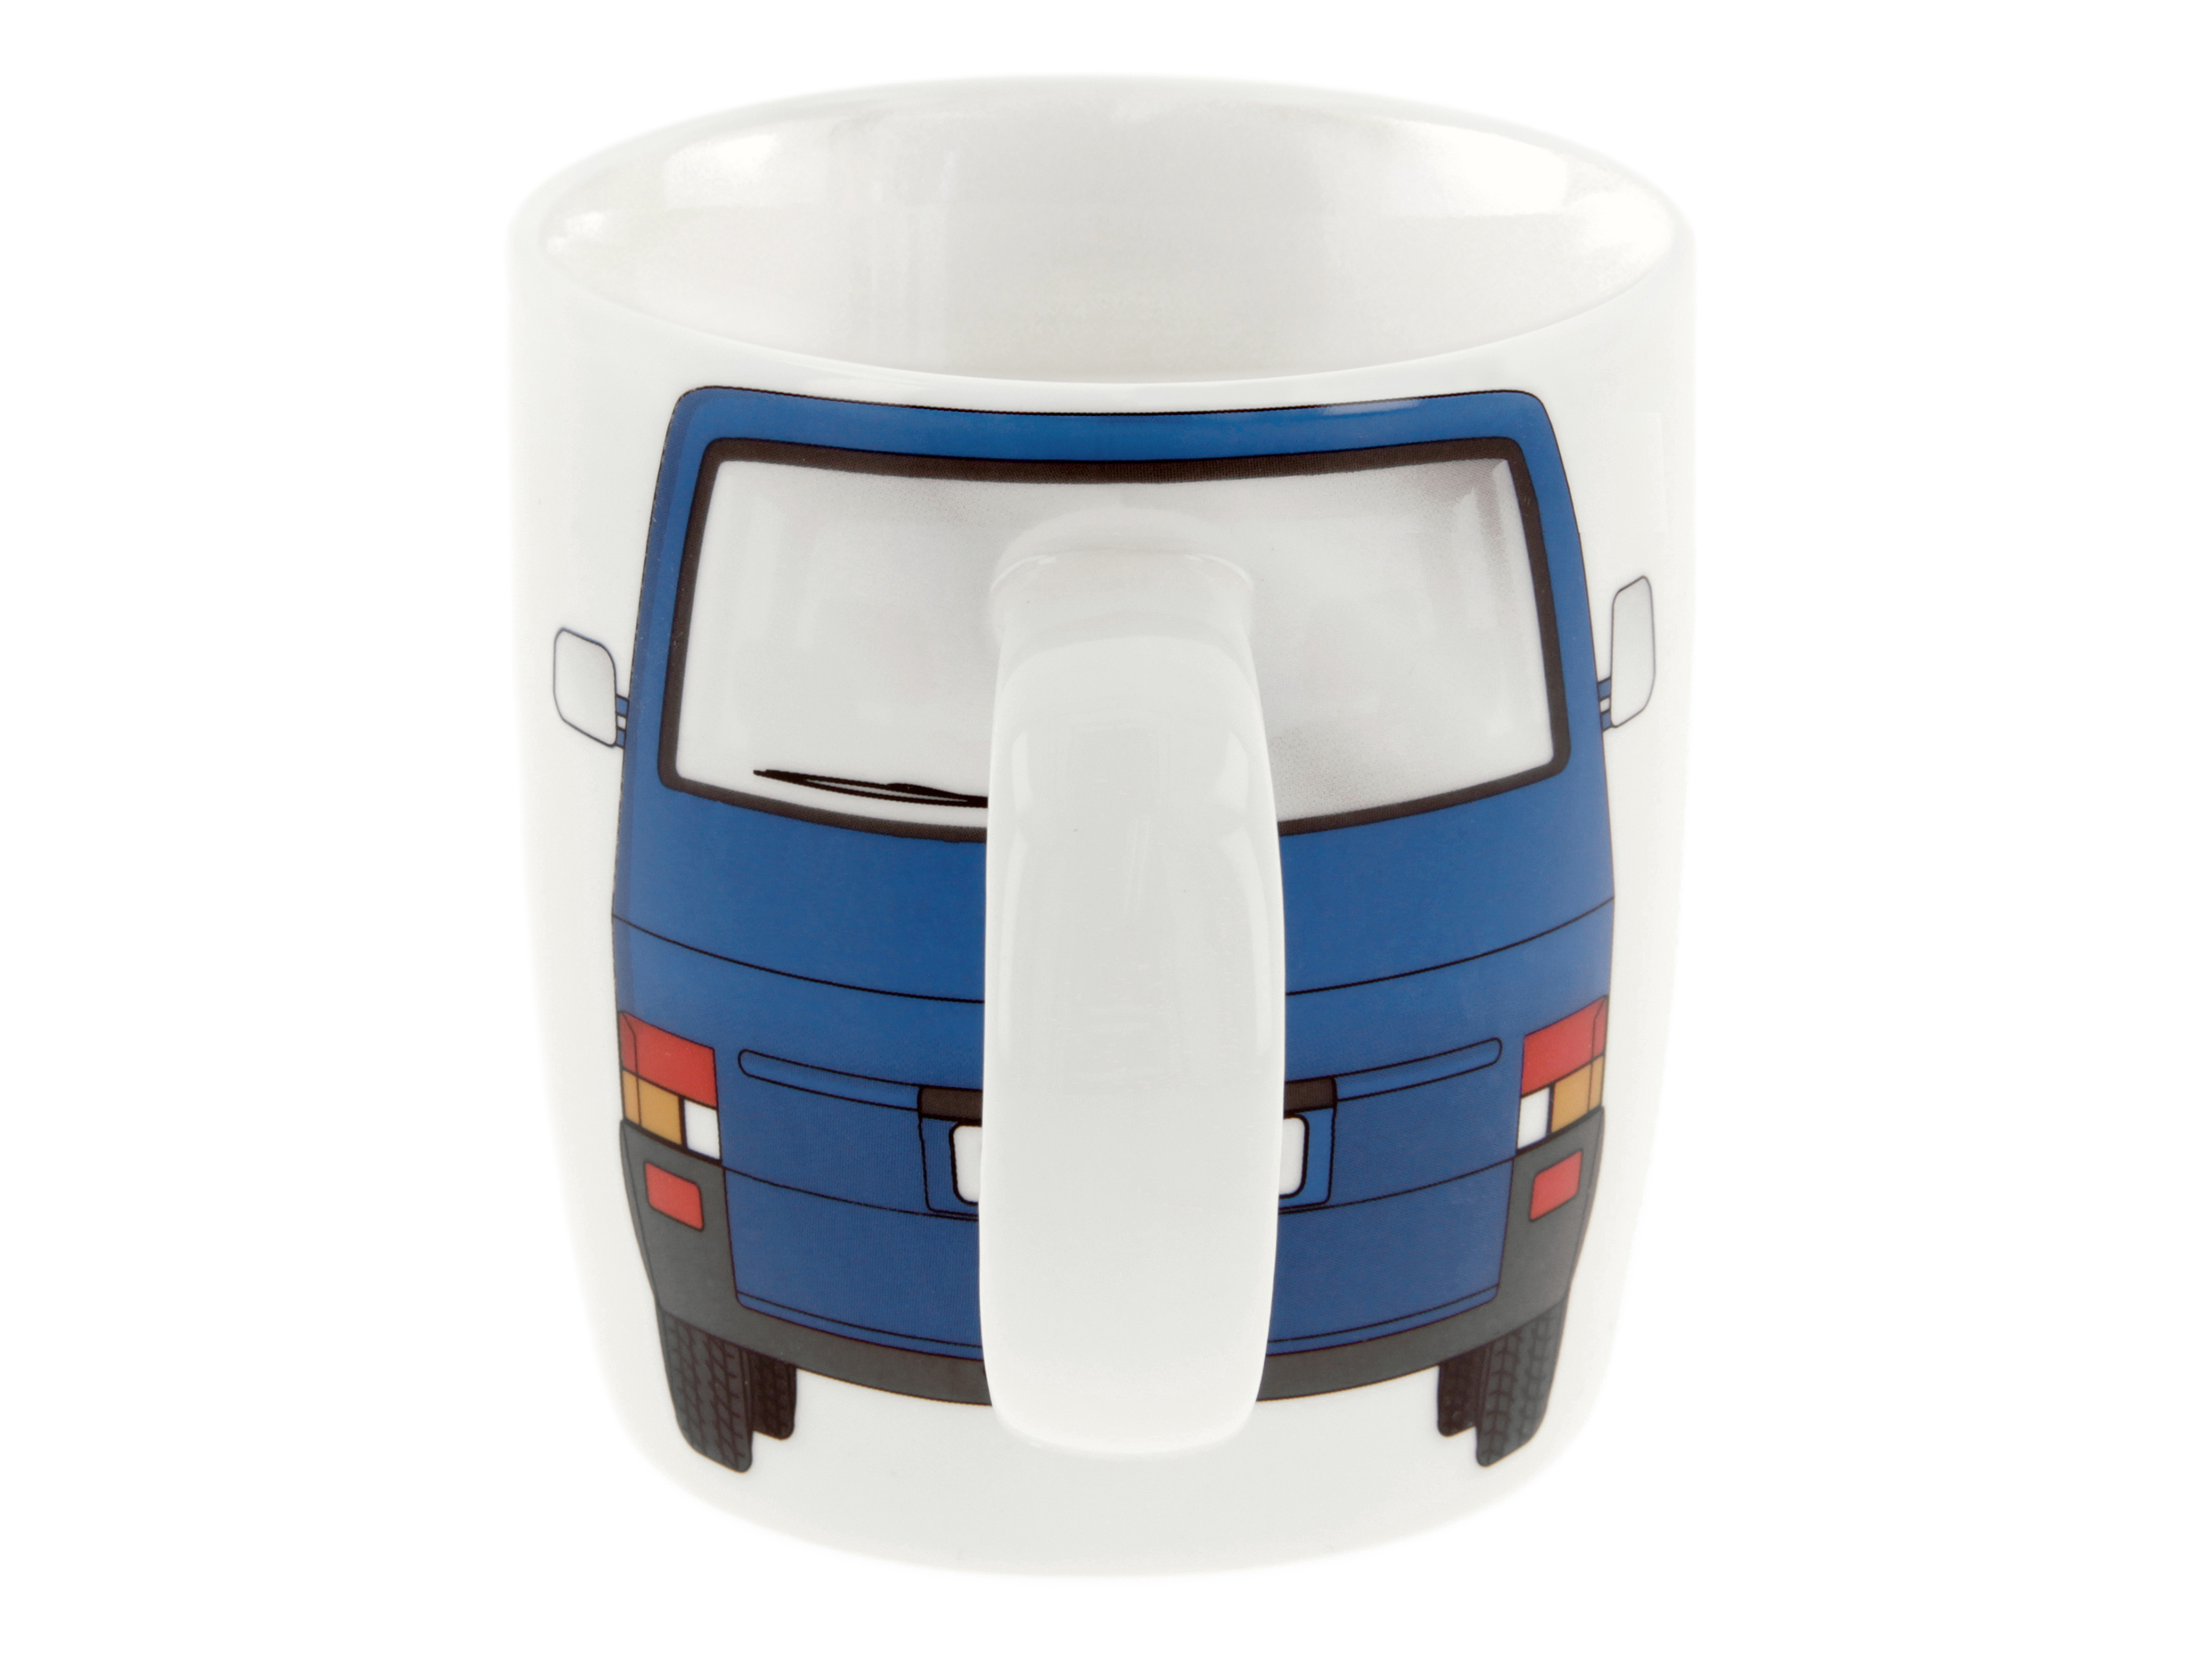 VOLKSWAGEN BUS VW T4 Combi Mug à café 370ml - bleu